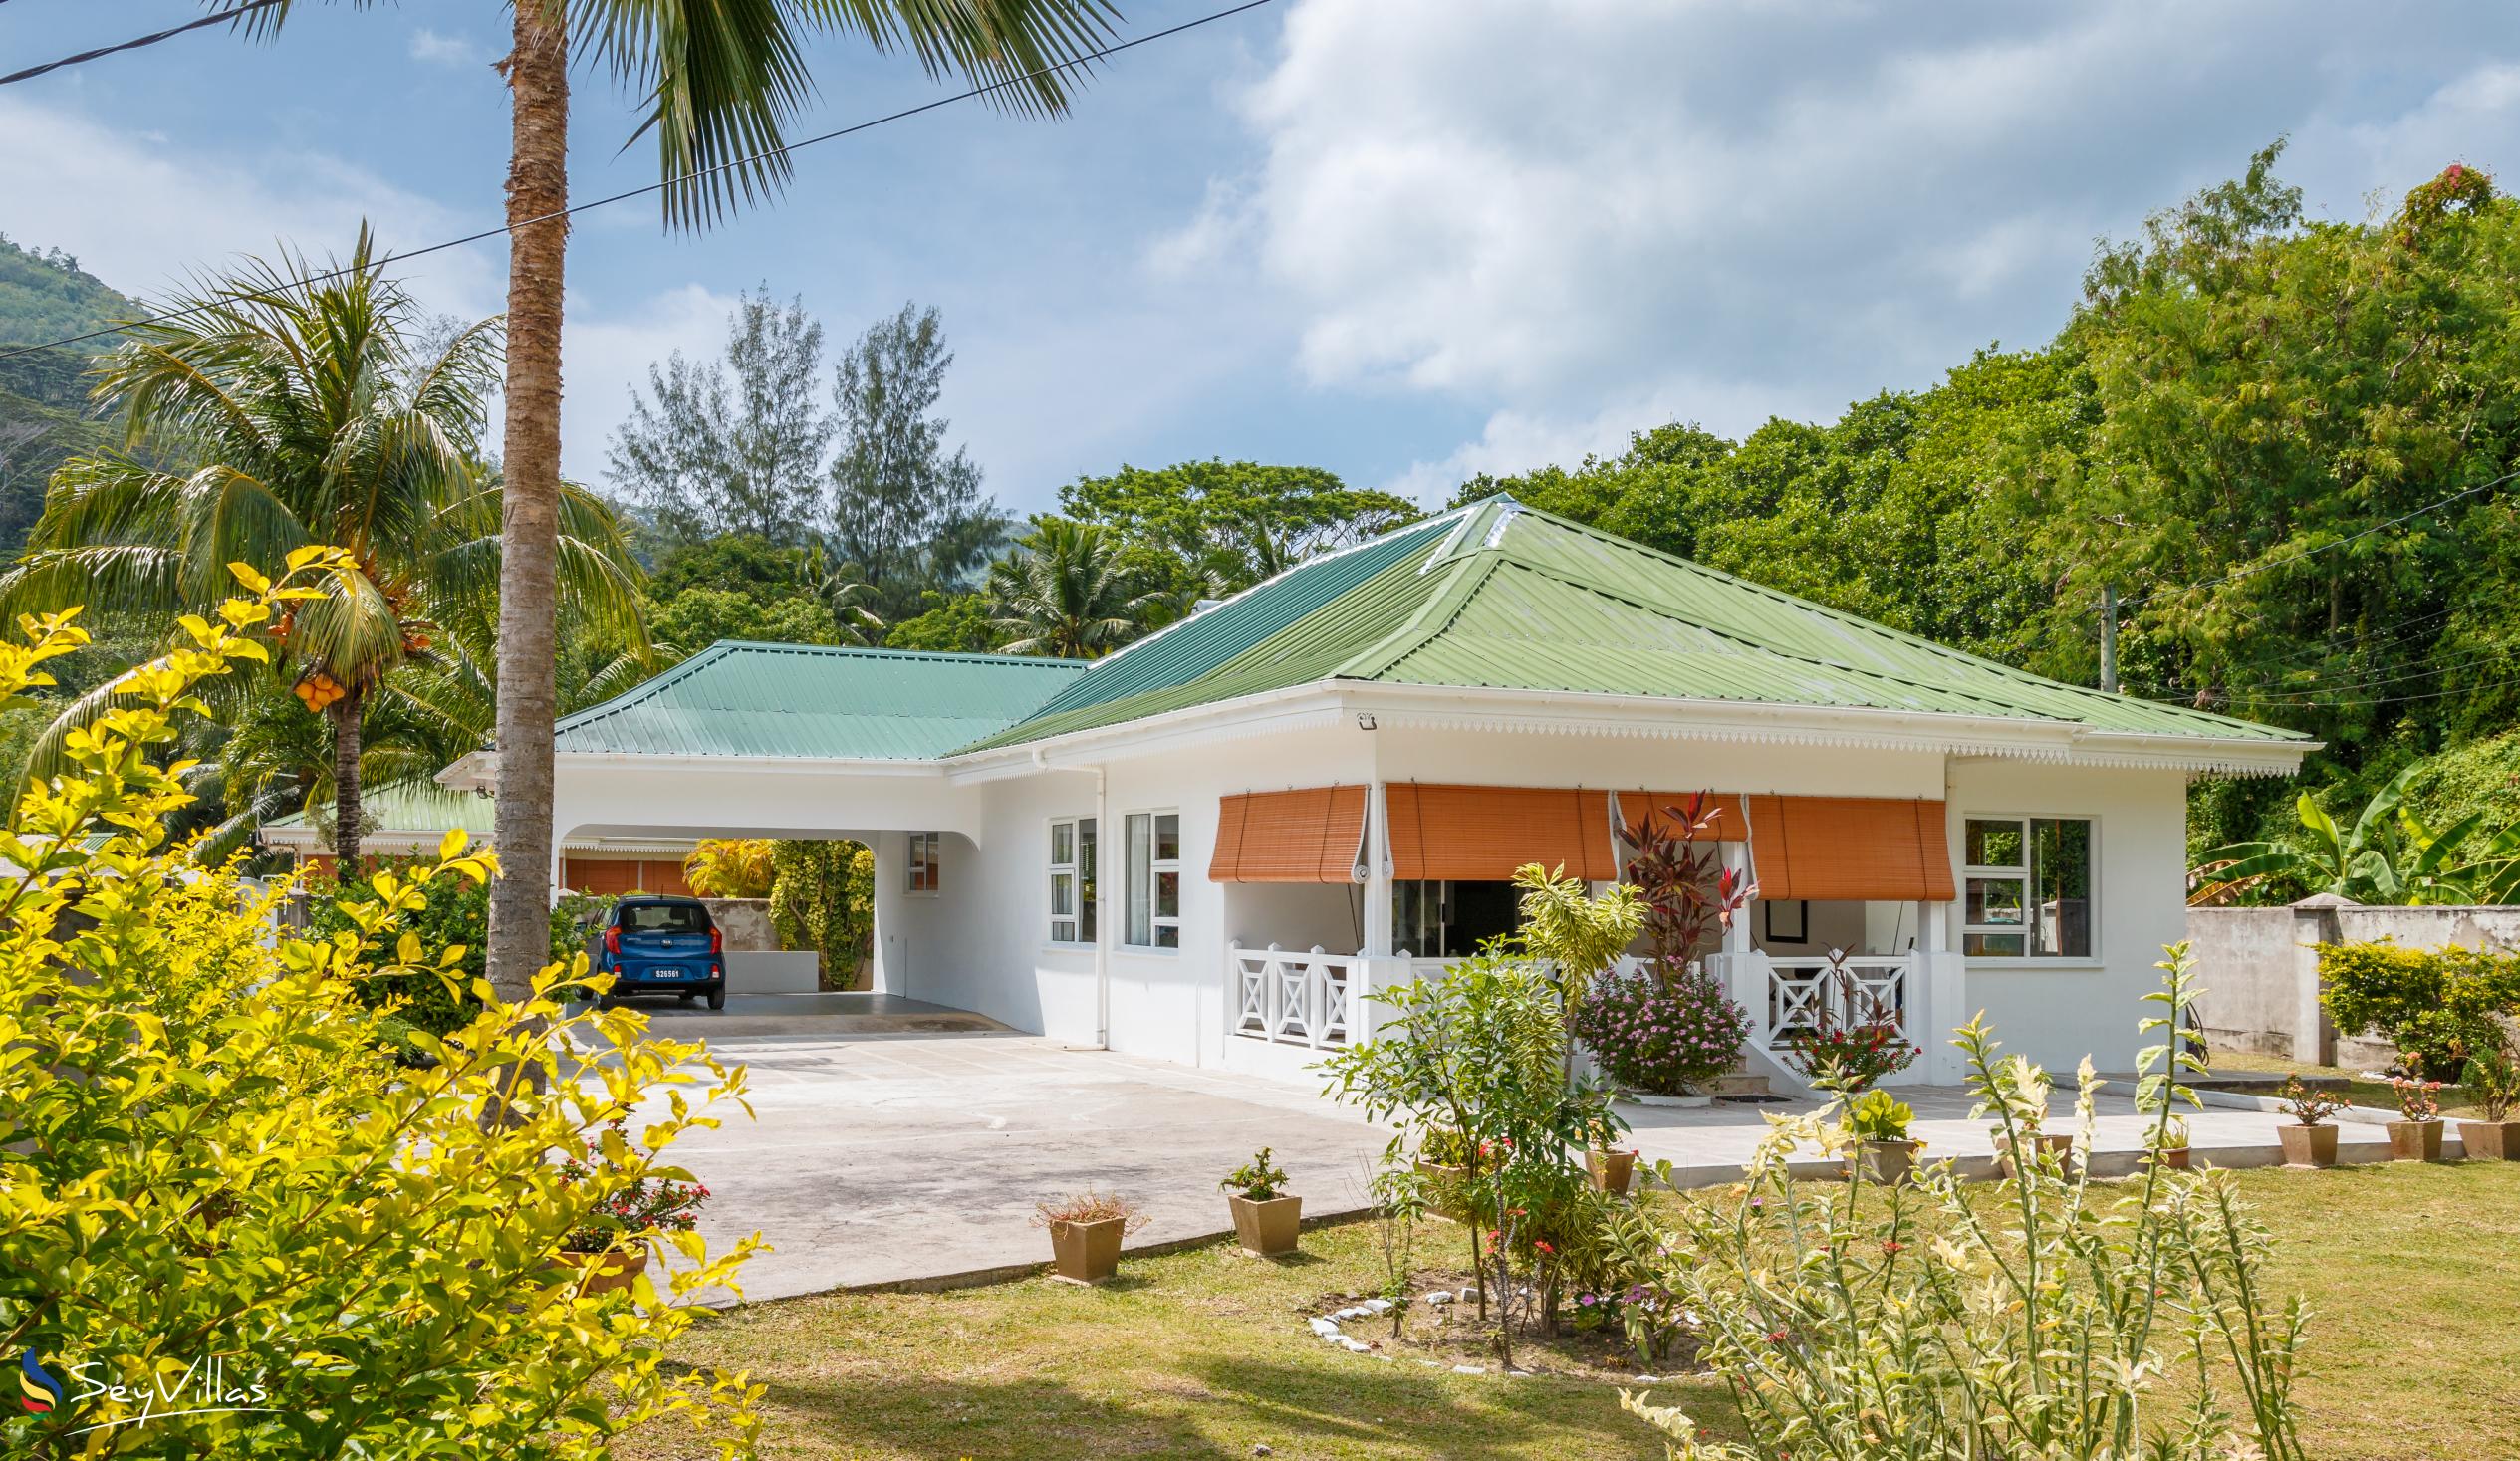 Photo 1: Coco Blanche (Maison Coco) - Outdoor area - Mahé (Seychelles)